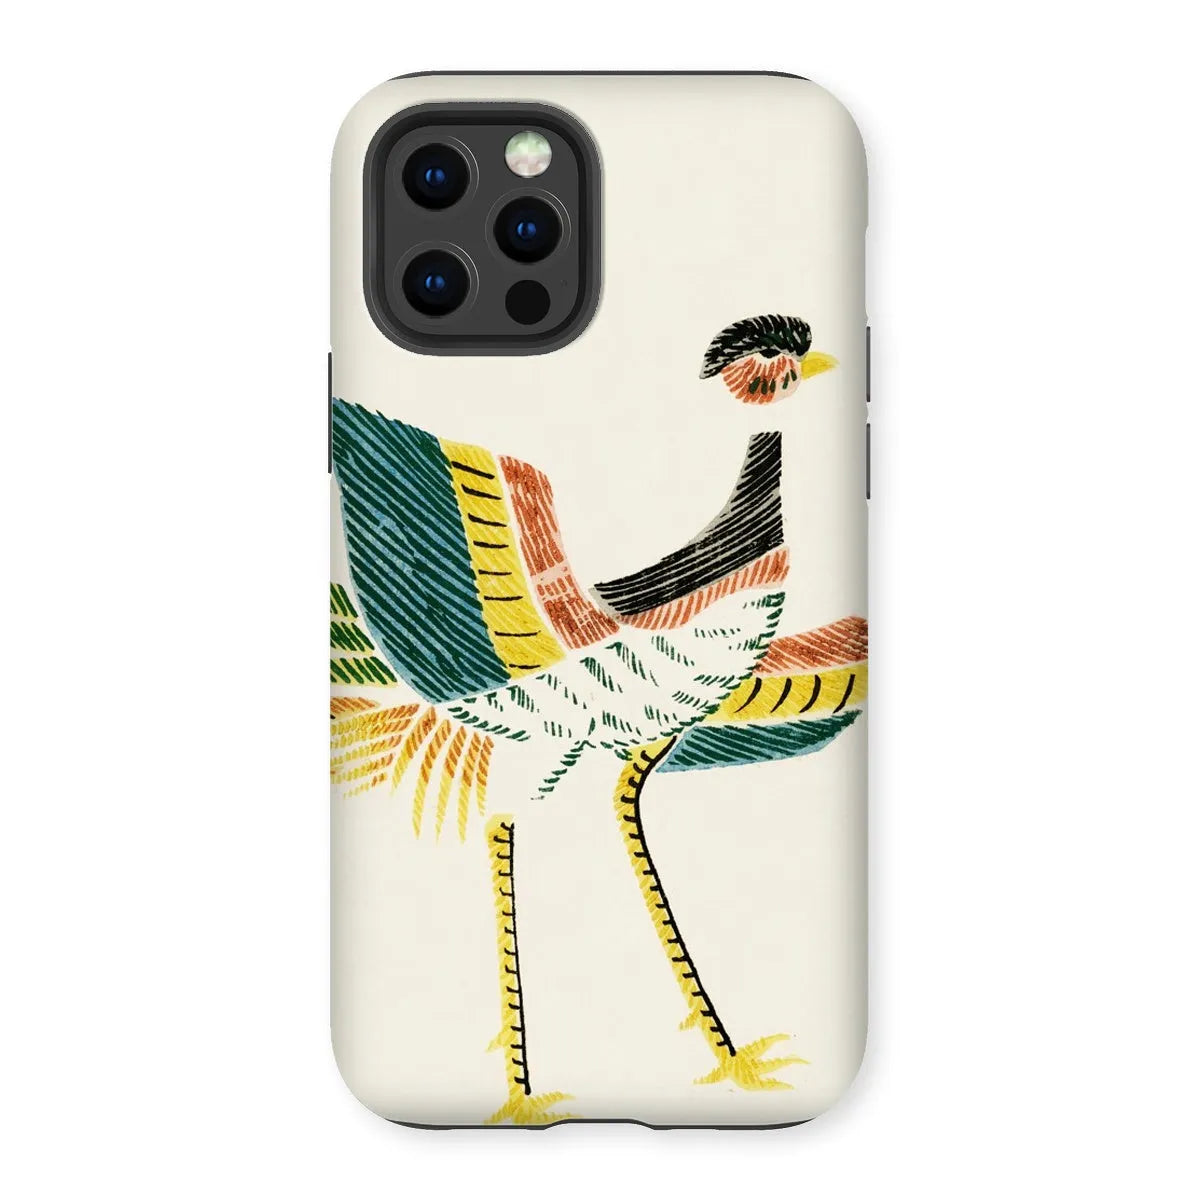 Woodblock Crane - Japanese Bird Phone Case - Taguchi Tomoki - Iphone 12 Pro / Matte - Mobile Phone Cases - Aesthetic Art